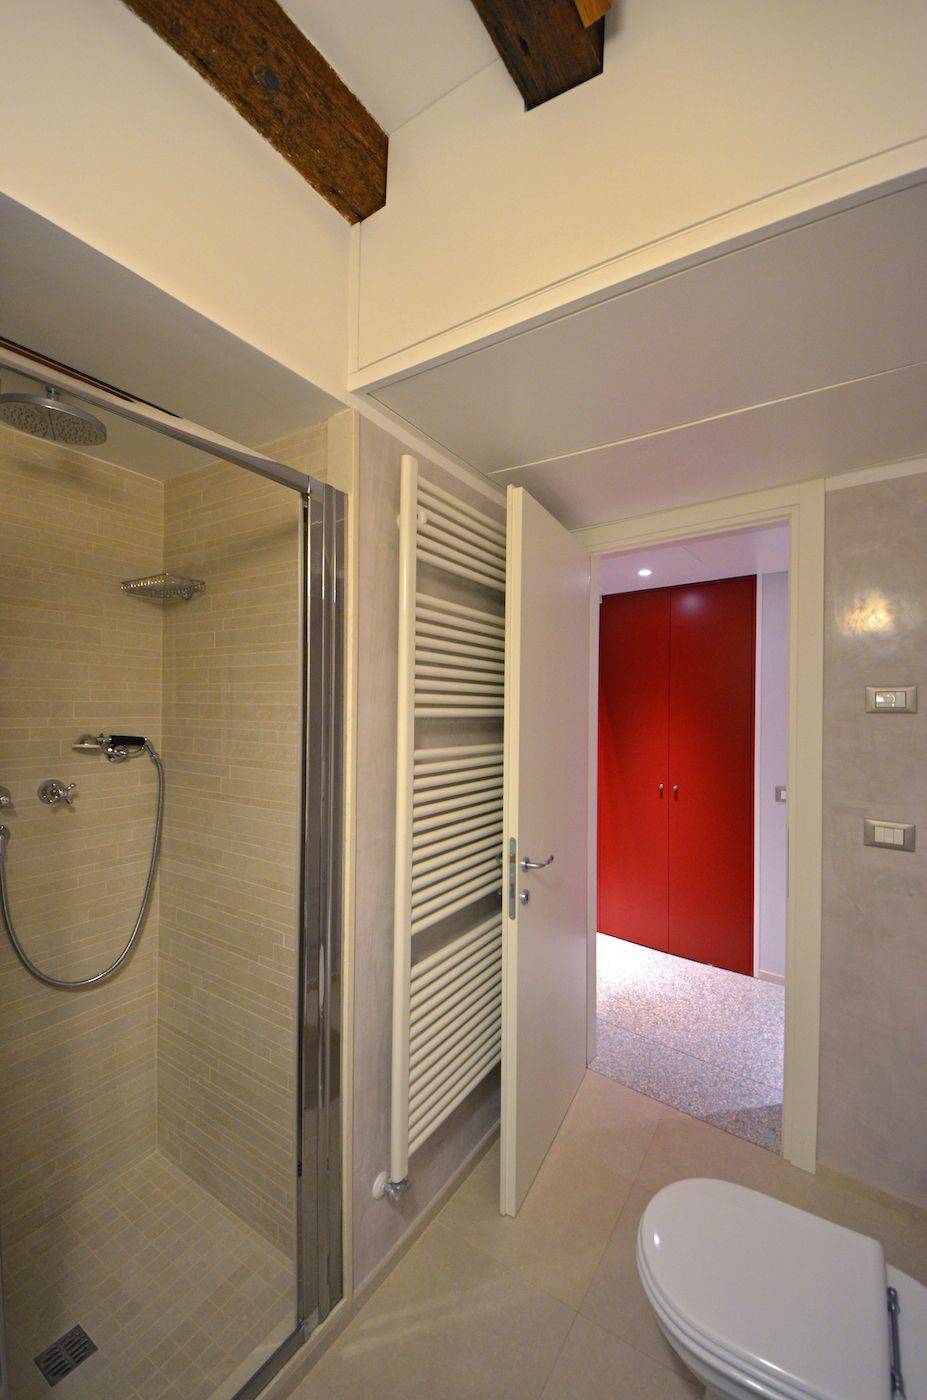 second bathroom of the Palladio Garden apartment